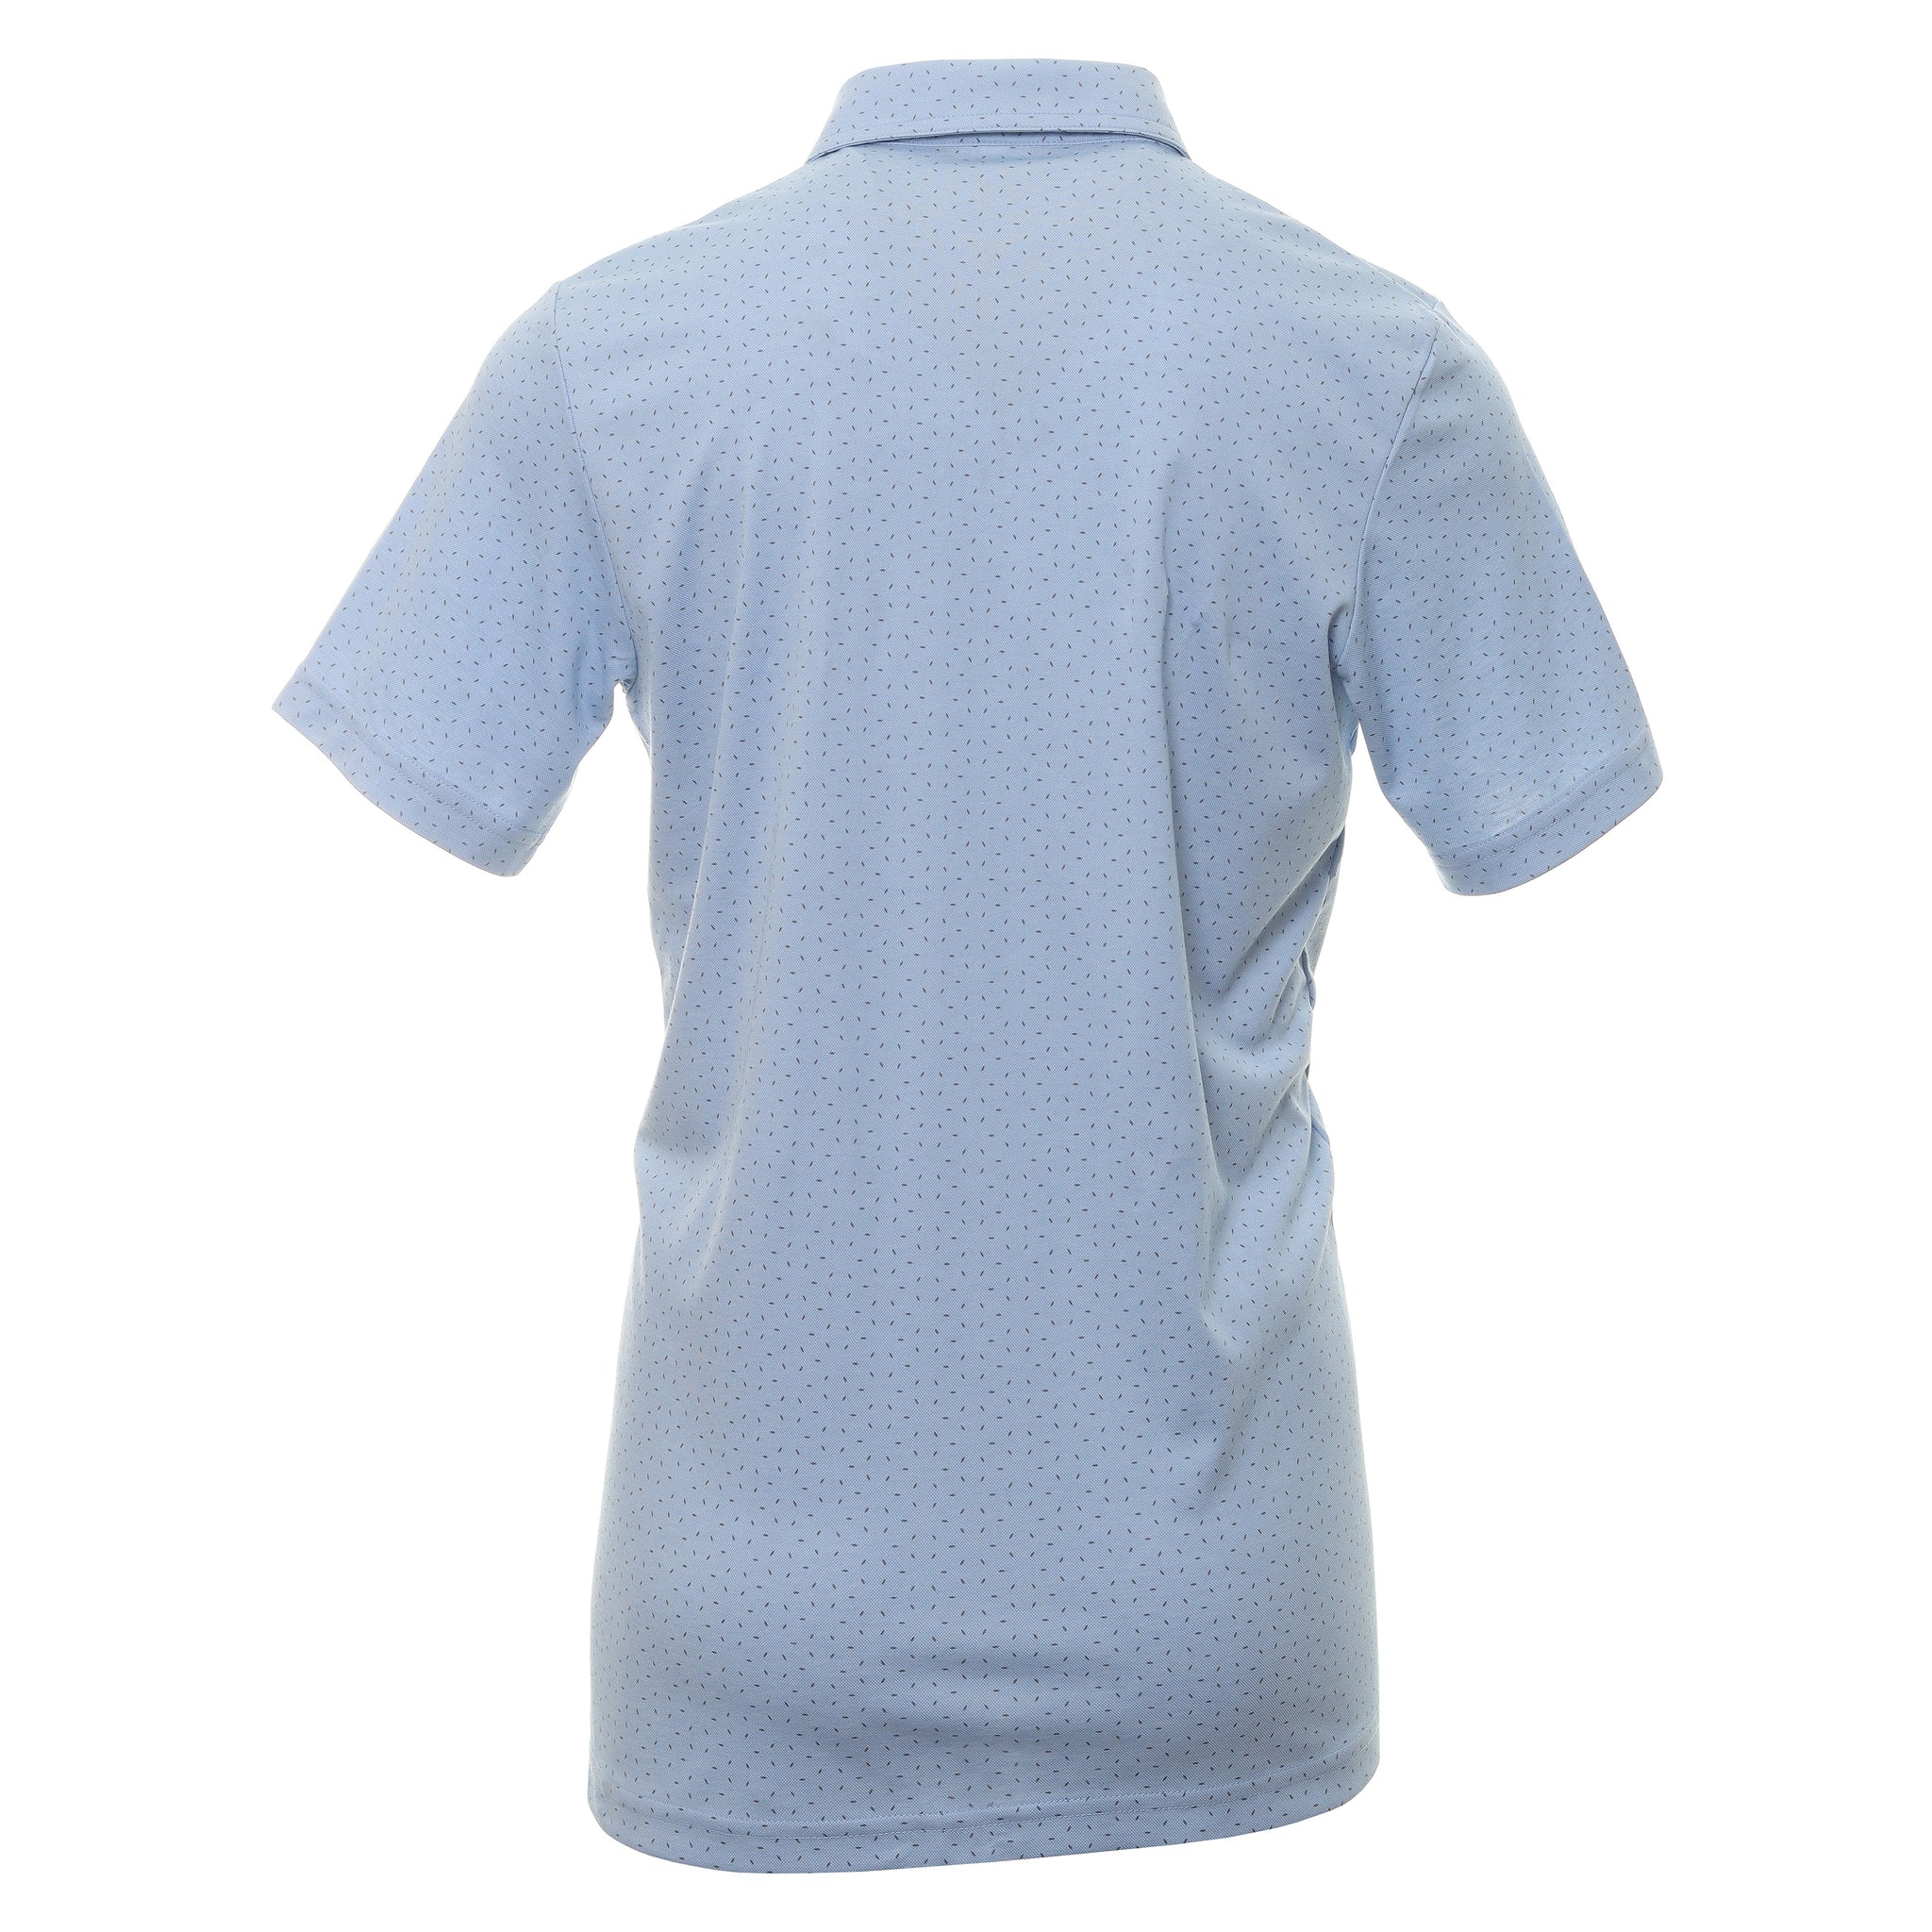 travismathew-carnaval-polo-shirt-1my110-heather-bel-air-blue